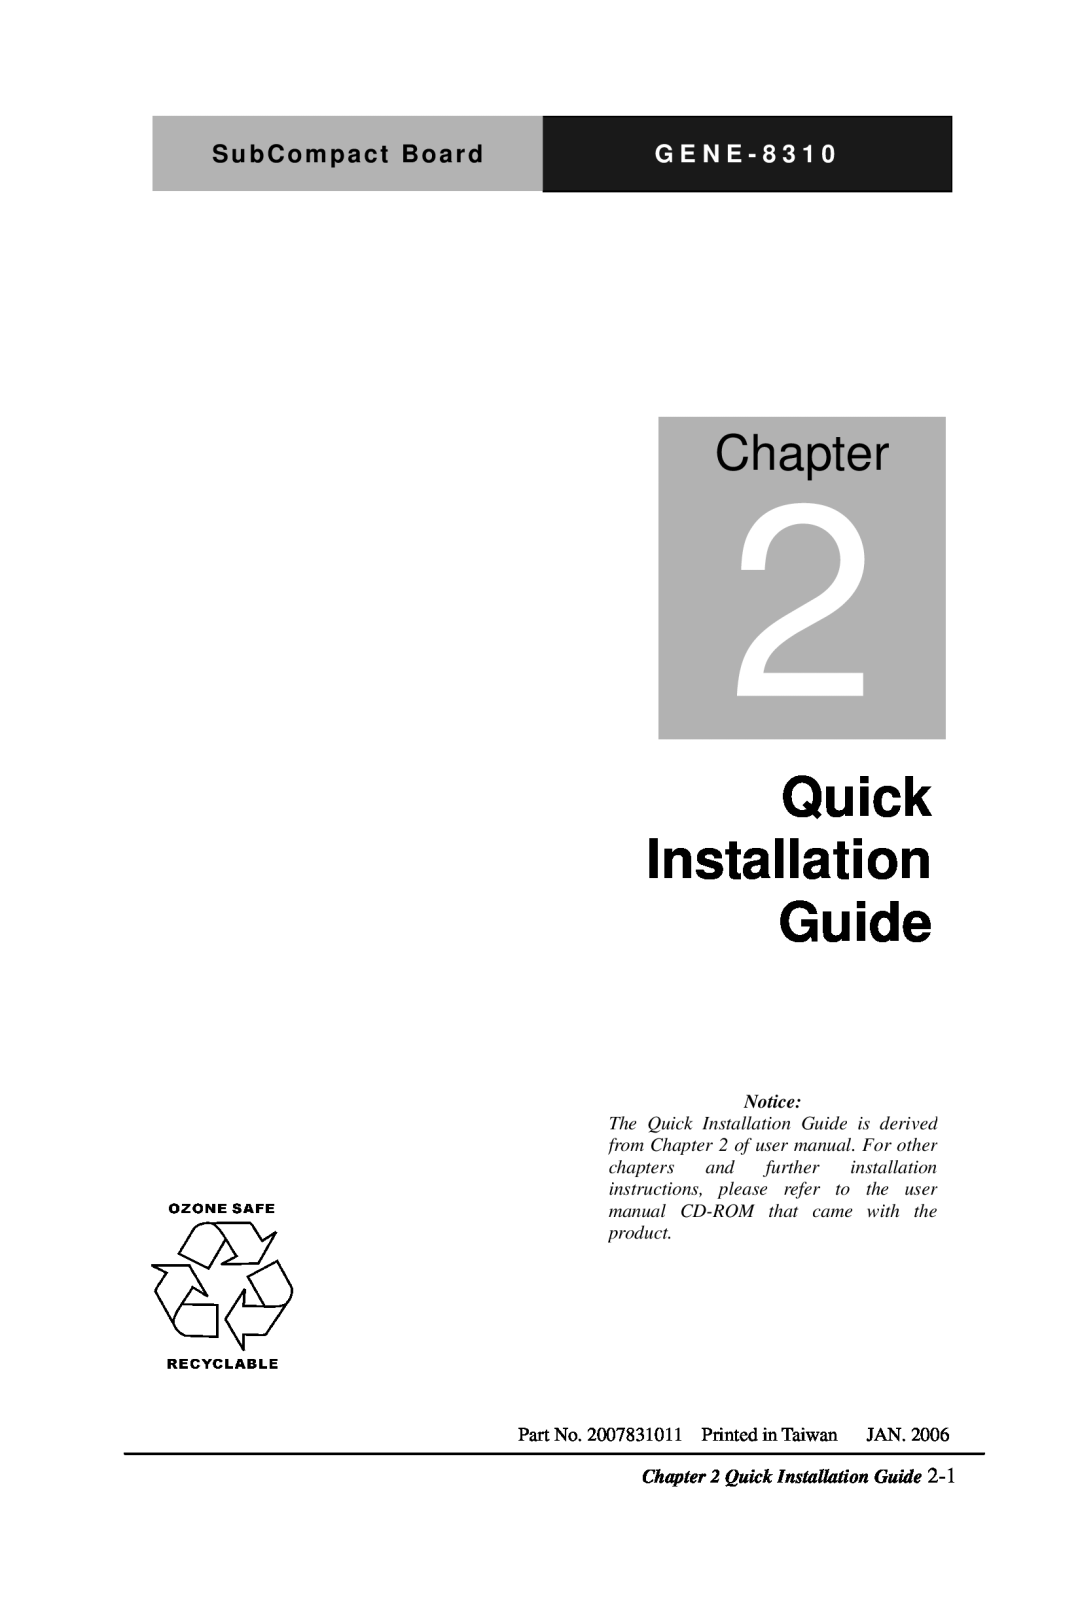 Intel GENE-8310 manual Quick Installation Guide, Chapter, SubCompact Board, G E N E - 8 3 1 